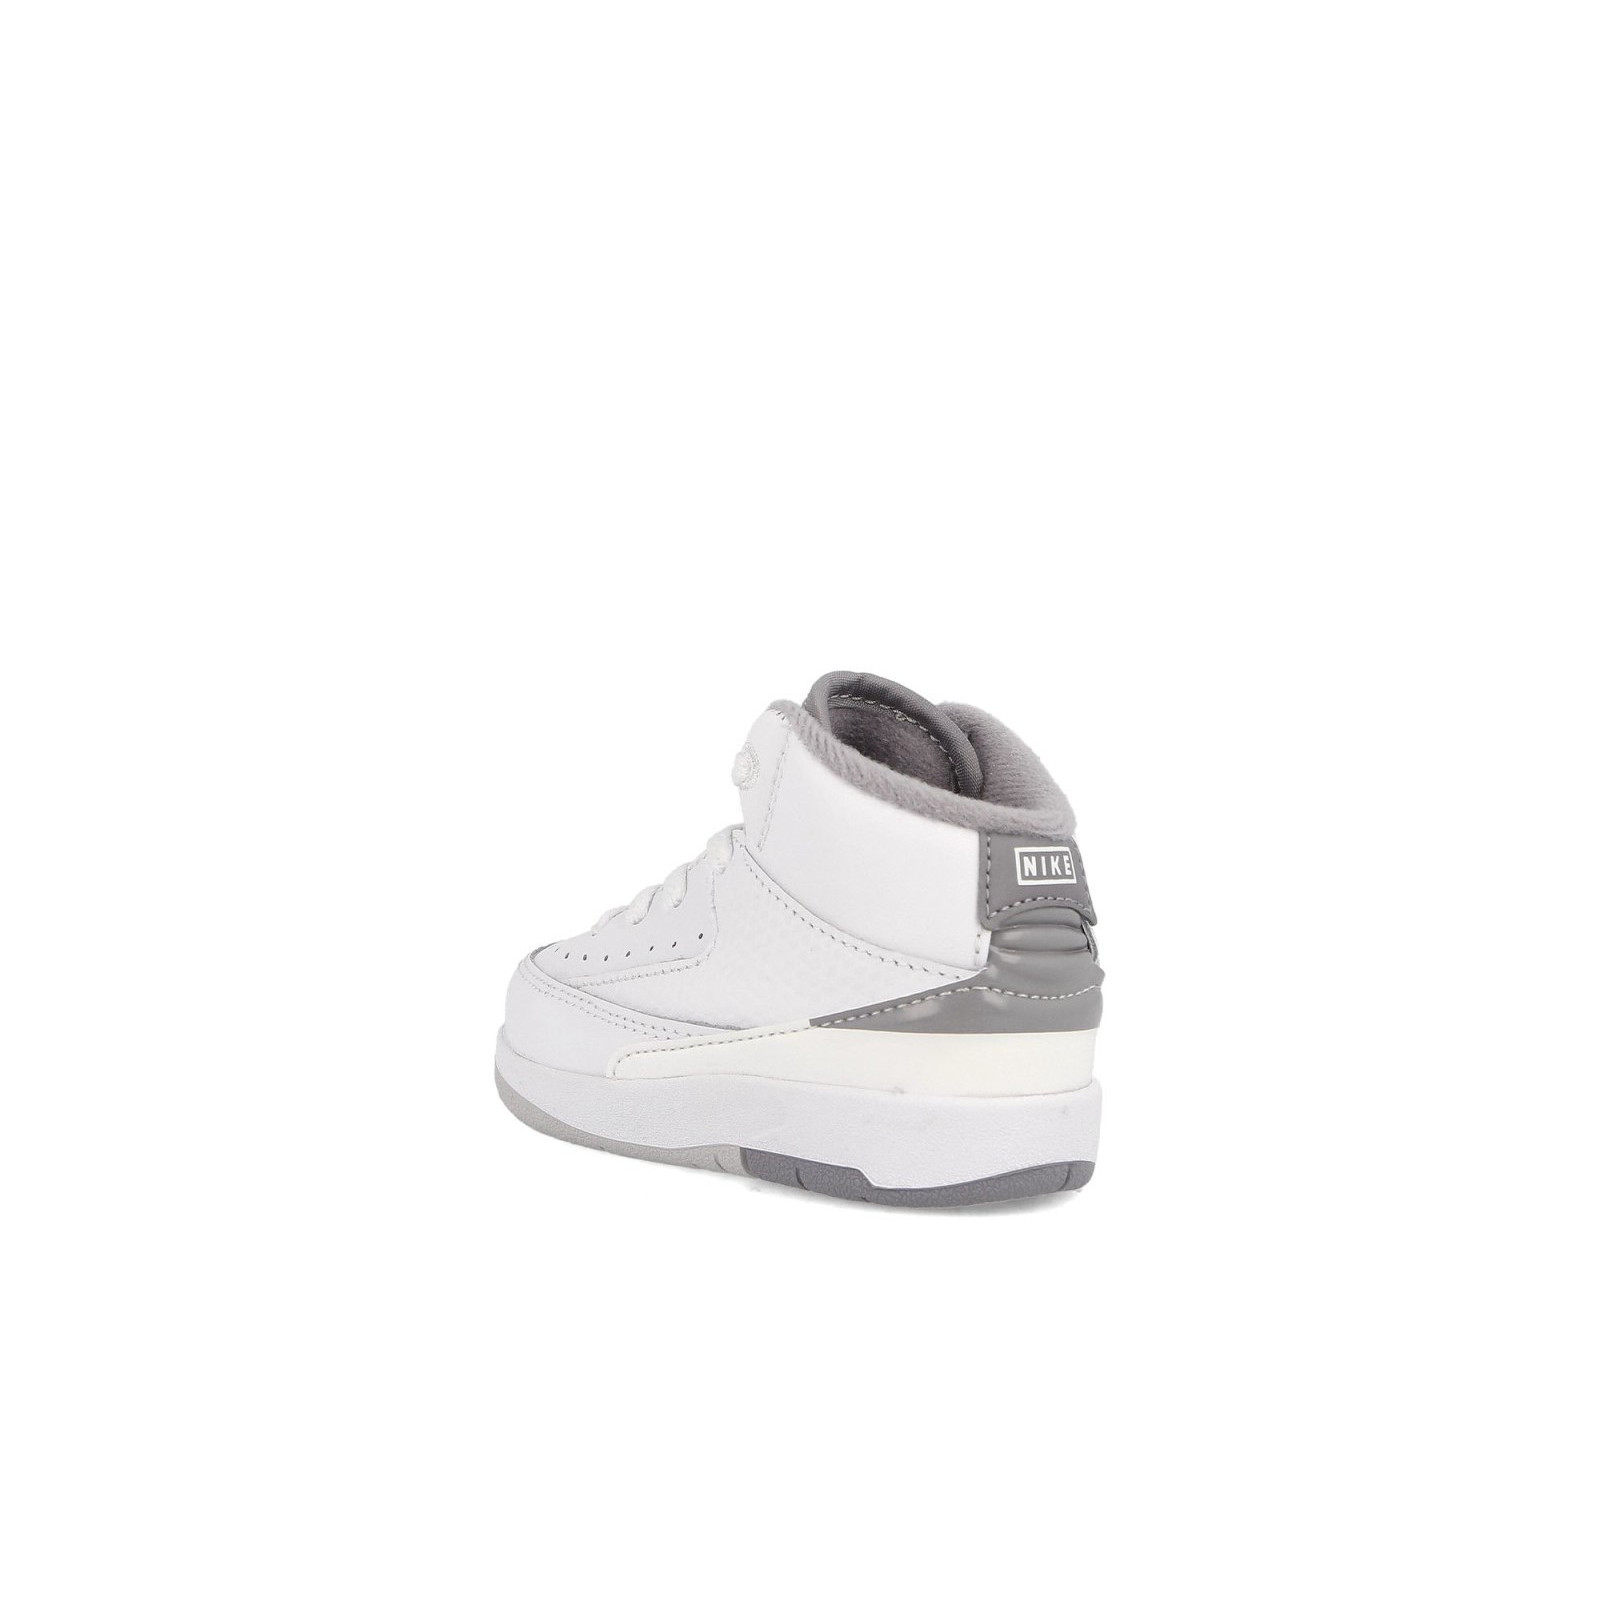 Air Jordan 2 Retro (TD)
« Cement Grey »